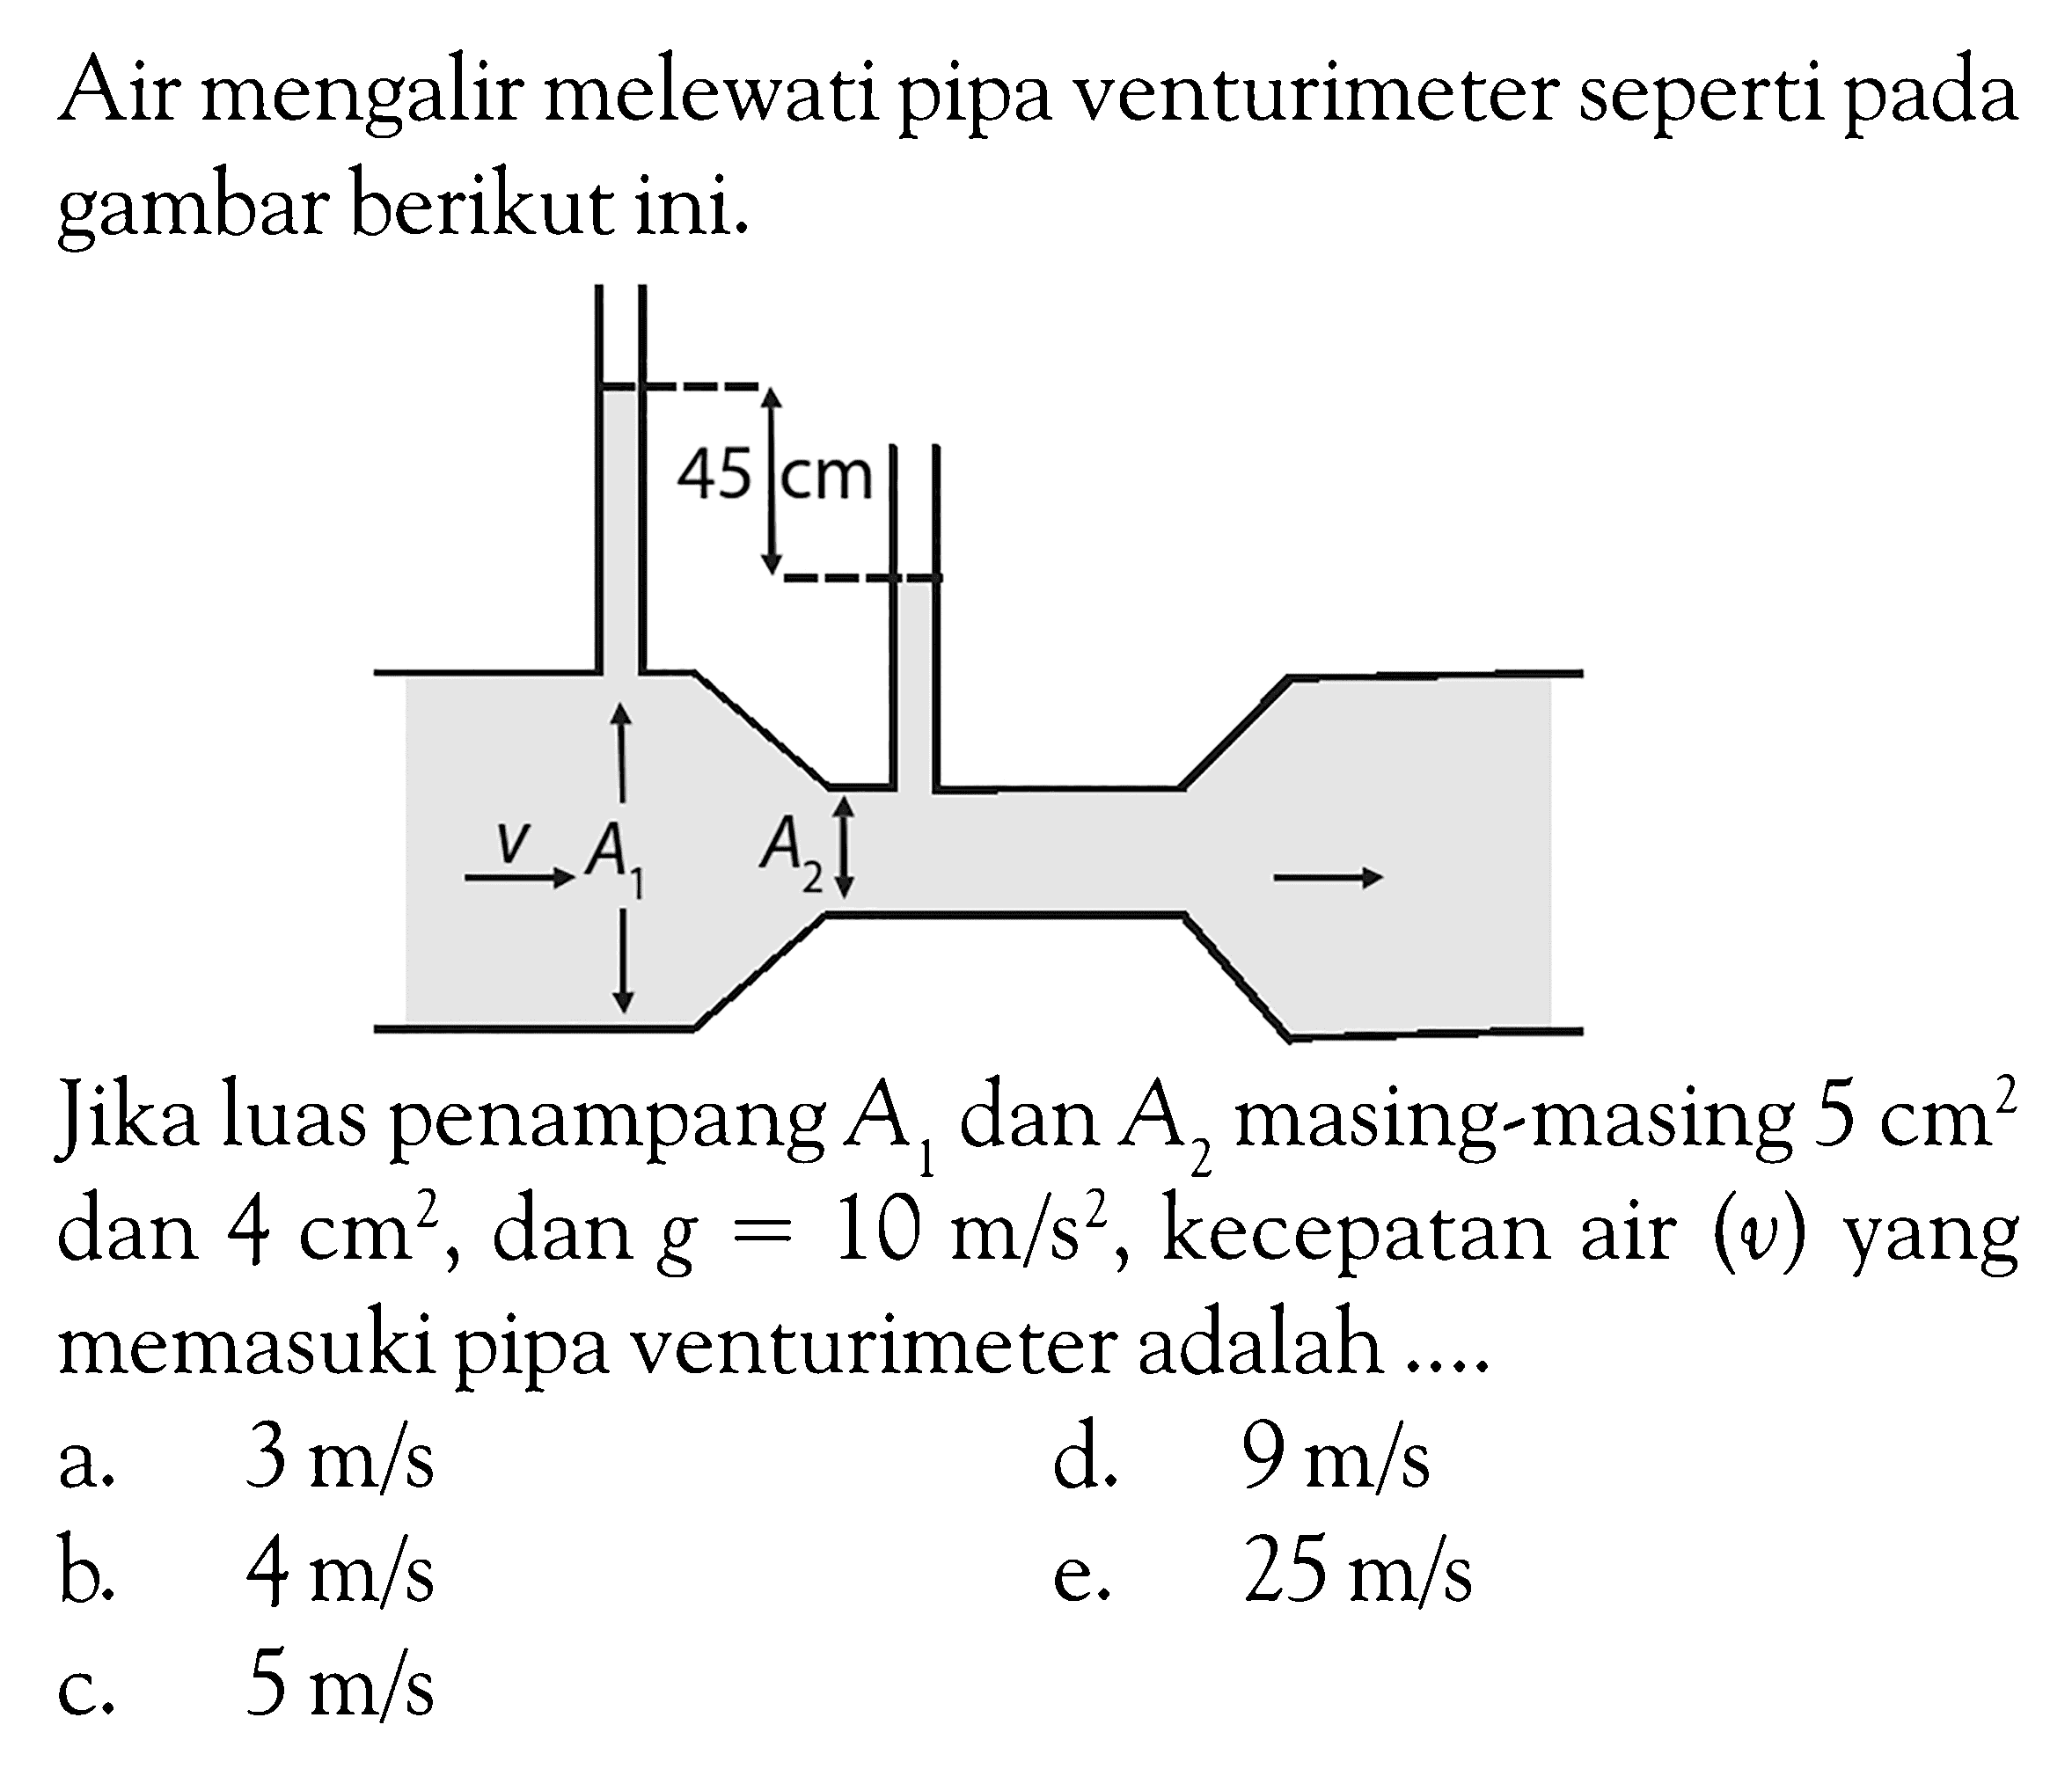 Air mengalir melewati pipa venturimeter seperti pada gambar berikut ini.45 cm v A1 A2 Jika luas penampang  A1  dan  A2  masing-masing  5 cm^2  dan  4 cm^2 , dan  g=10 m/s^2 , kecepatan air  (v)  yang memasuki pipa venturimeter adalah .... a.   3 m/s d.   9 m/s b.   4 m/s e.  25 m/s c.  5 m/s 